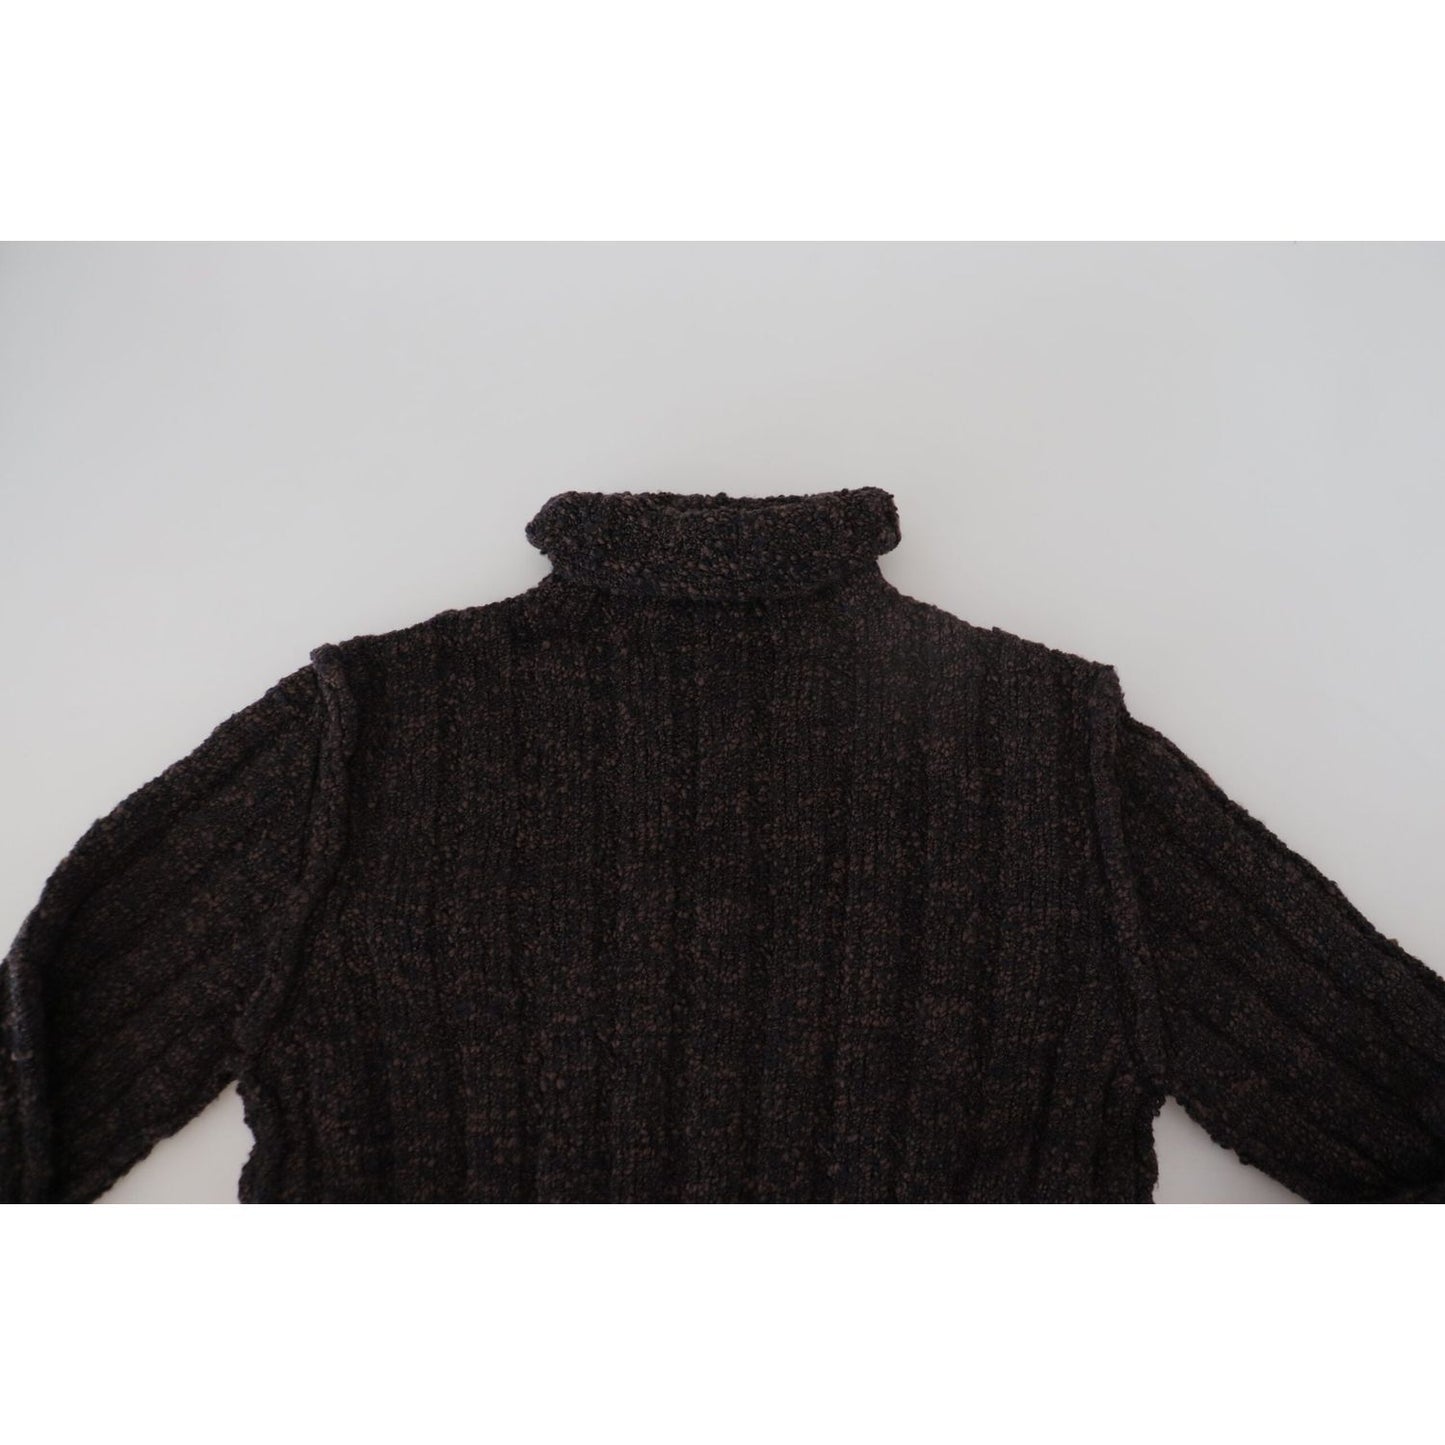 Dolce & Gabbana Elegant Turtleneck Wool-Blend Sweater brown-wool-knit-turtleneck-pullover-sweater IMG_6357-scaled-292dcb9b-0e1.jpg